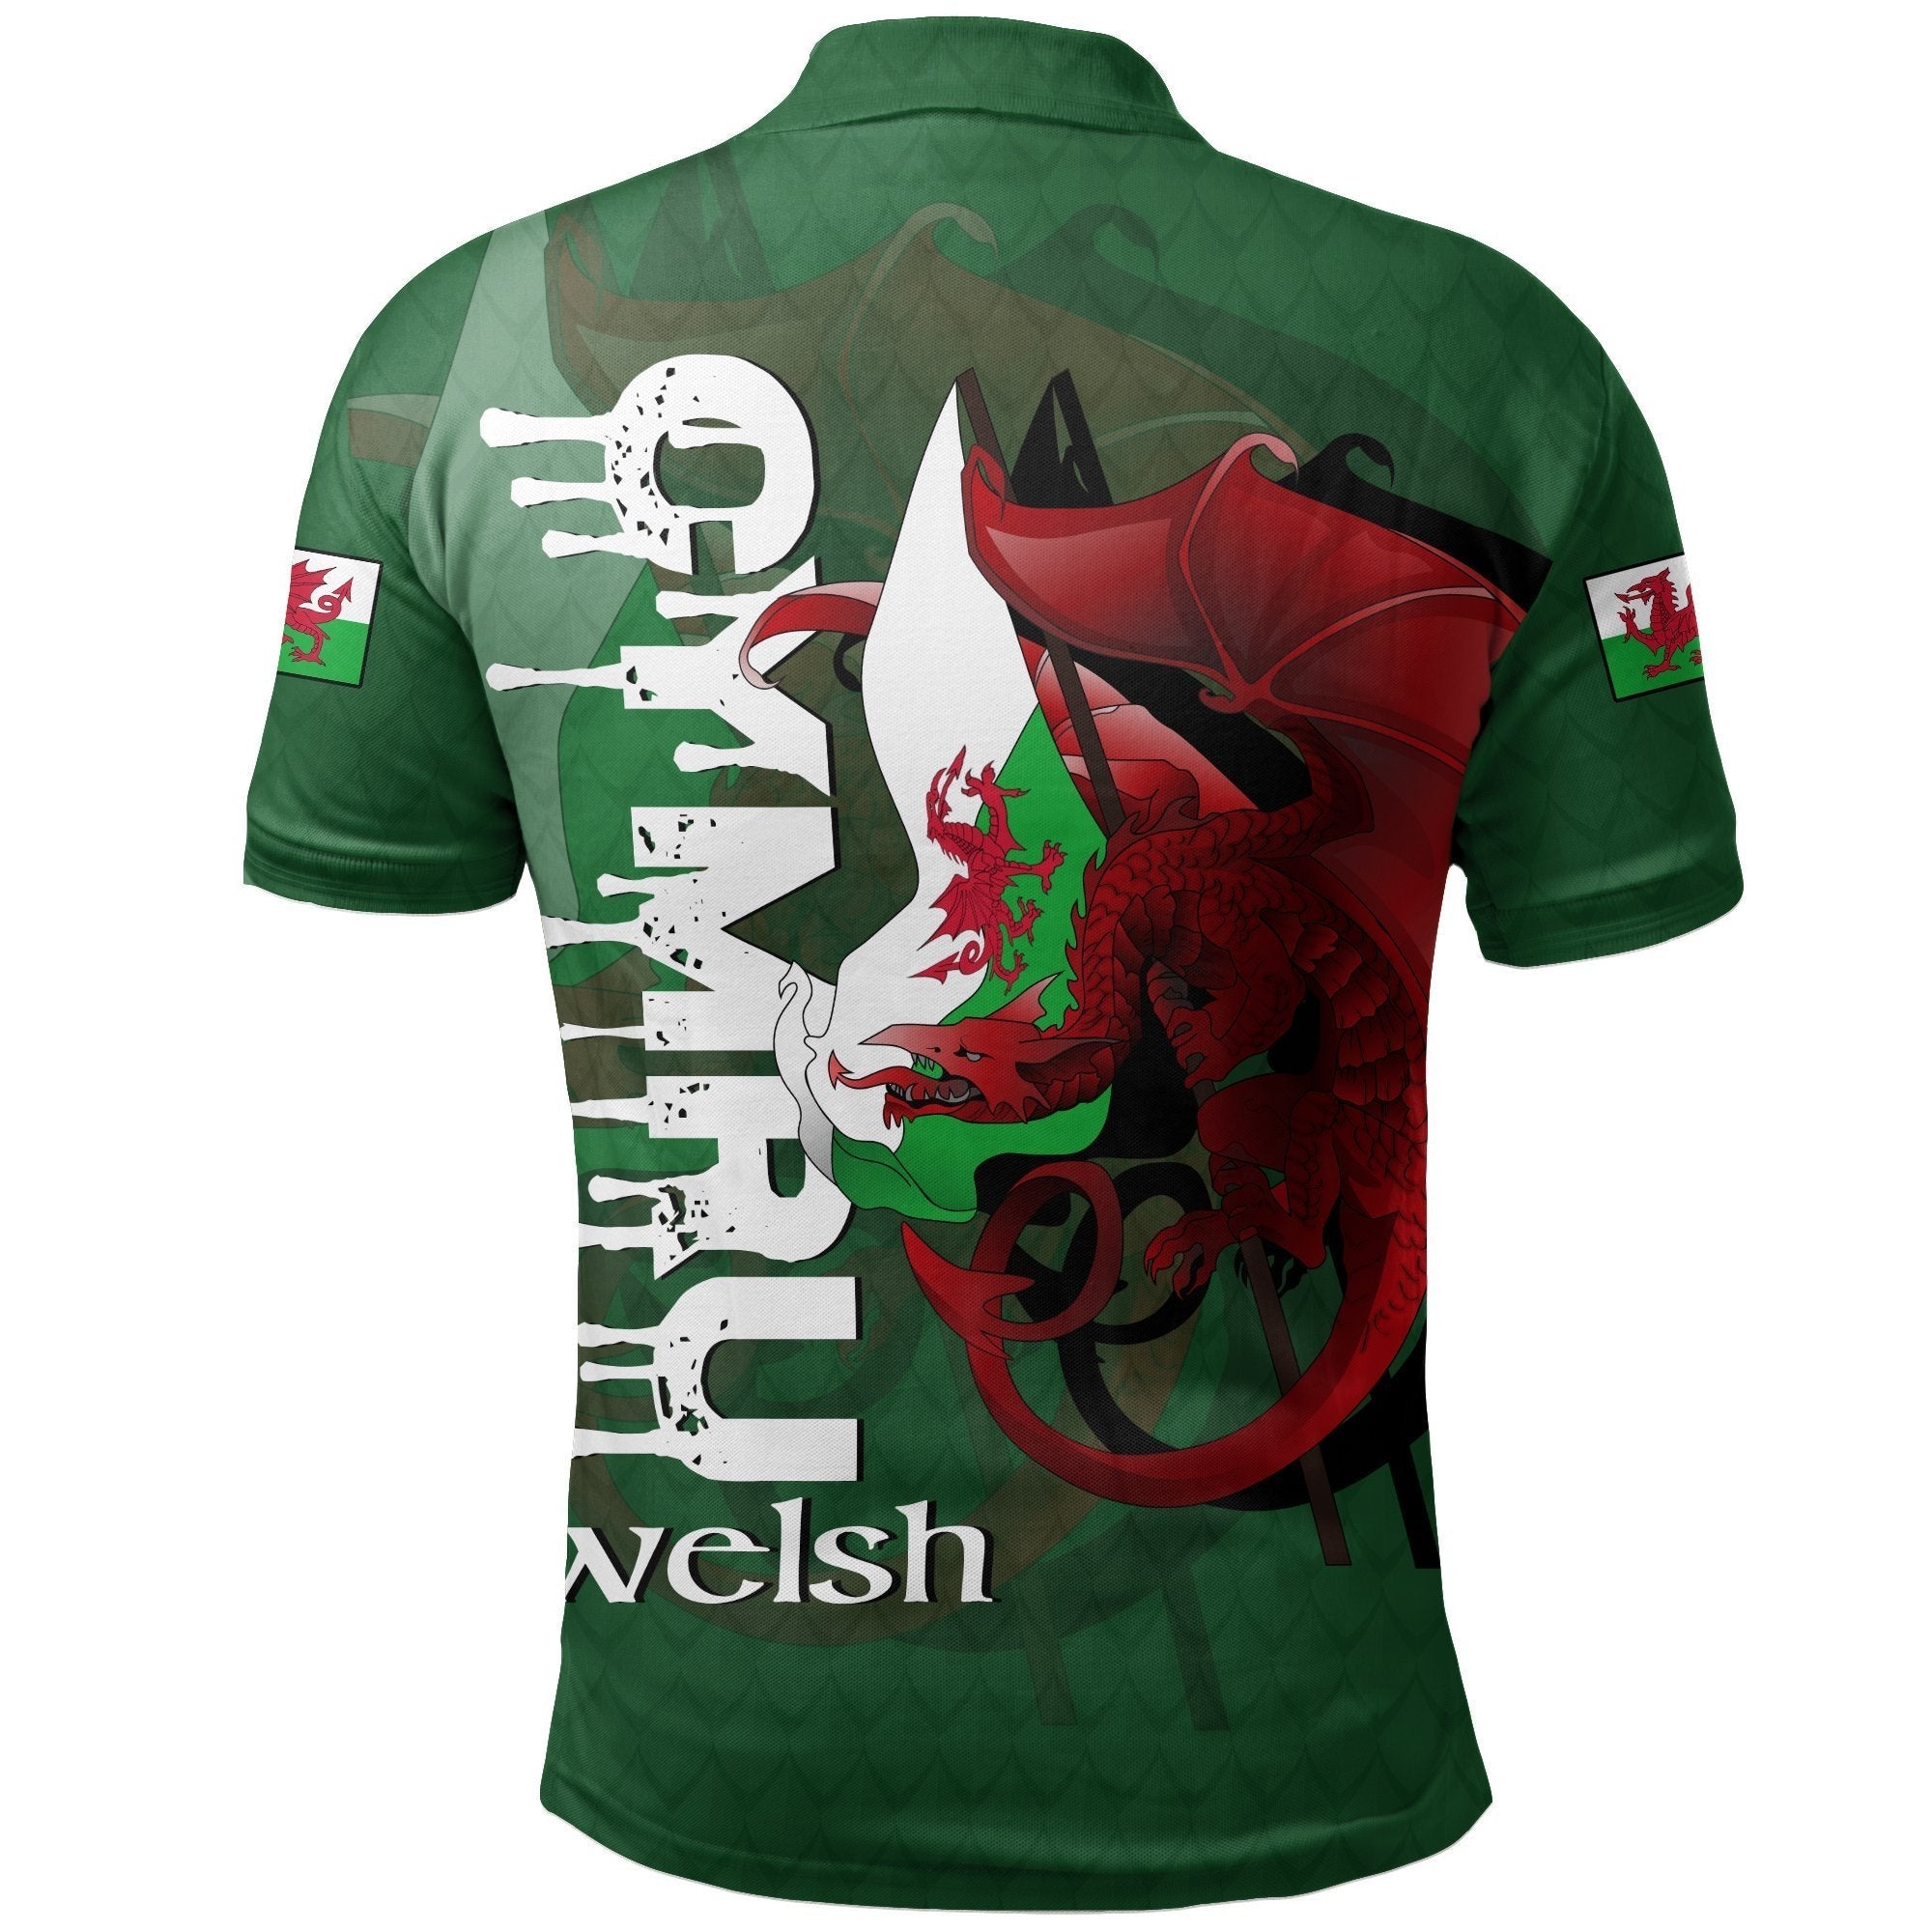 welsh-polo-shirt-wales-flag-cymru-dragon